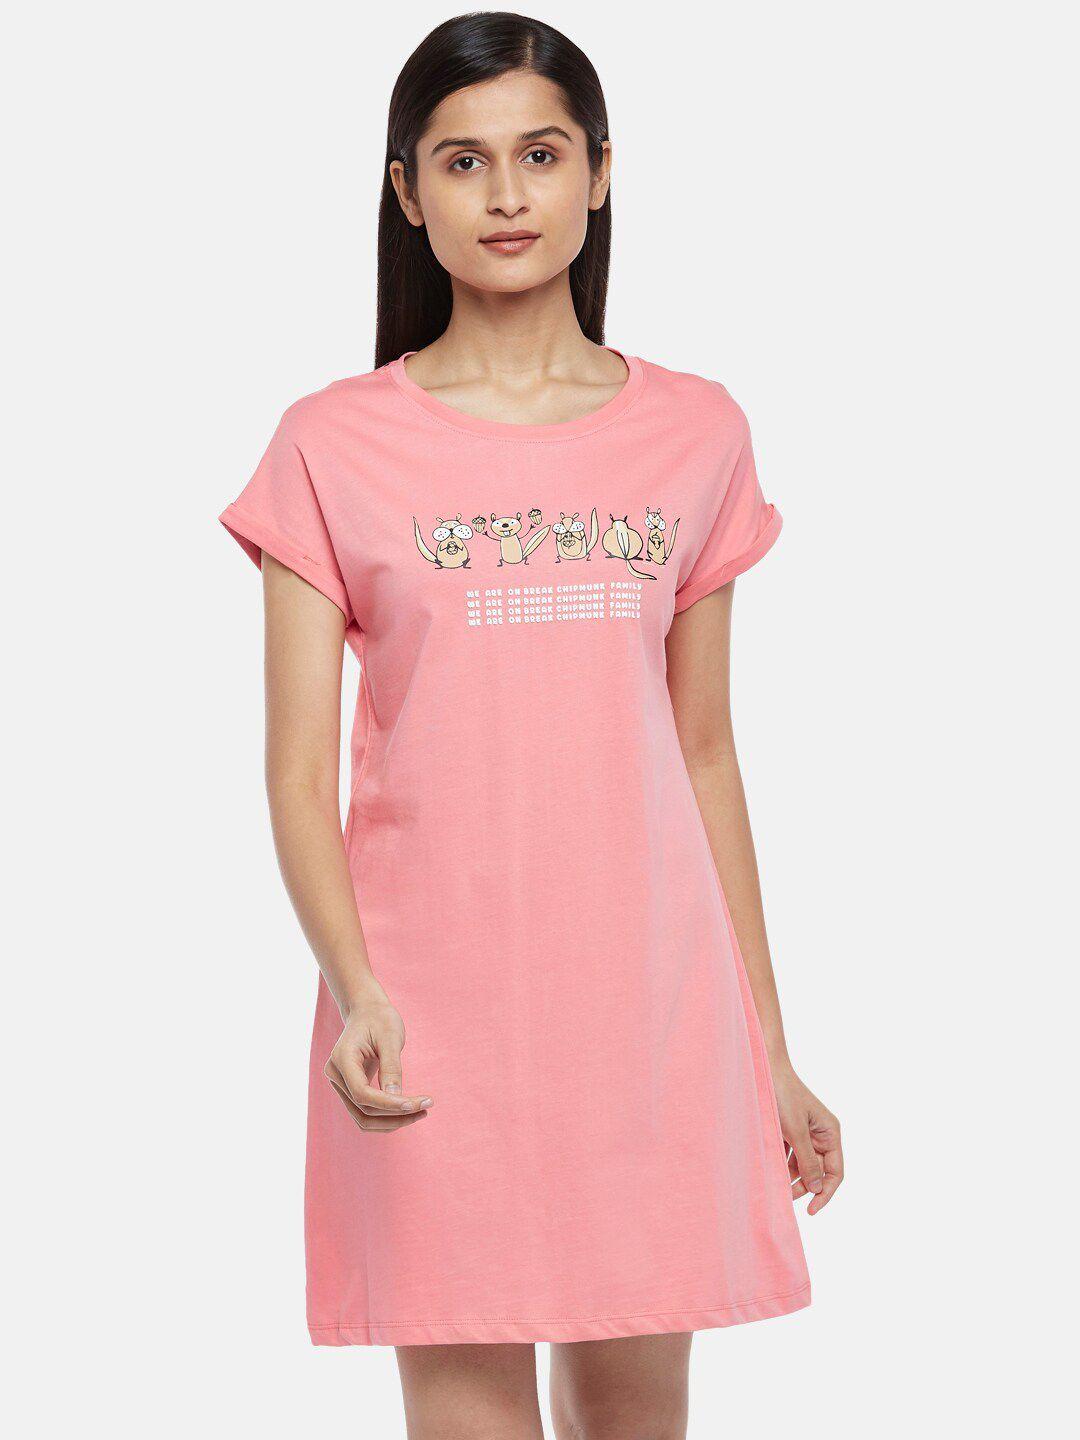 dreamz by pantaloons women pink printed cotton nightdress